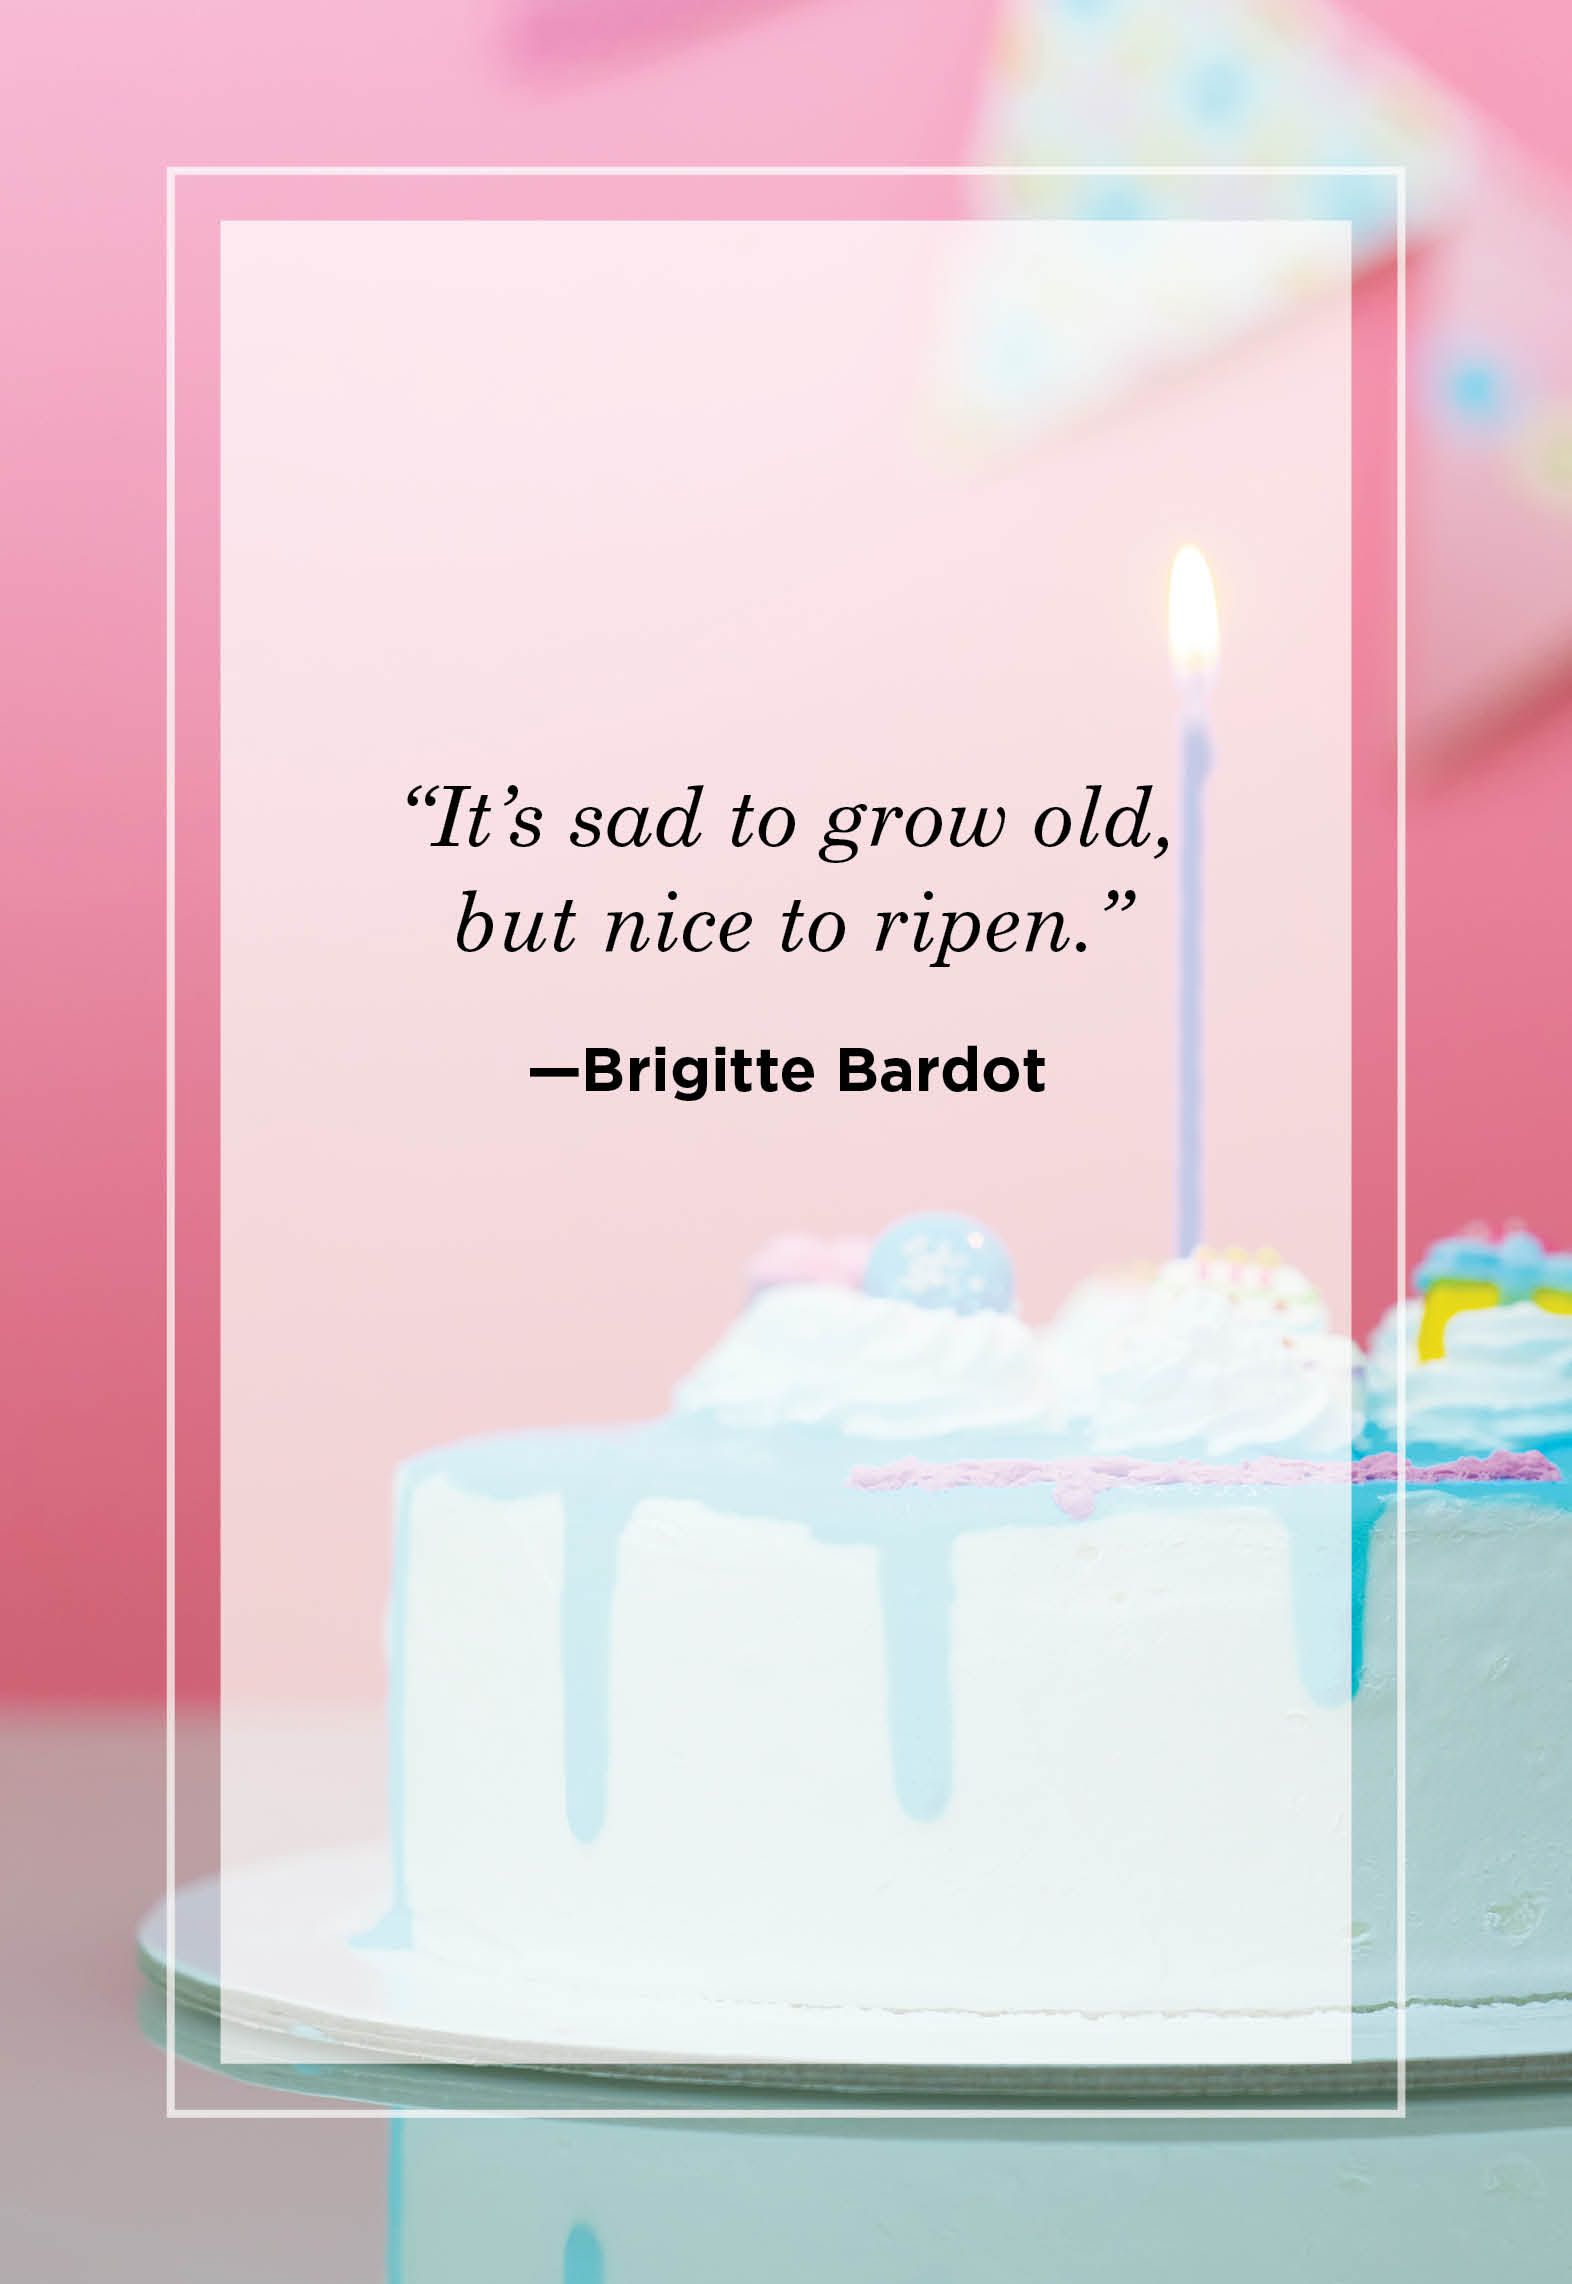 sad birthday quotes sayings